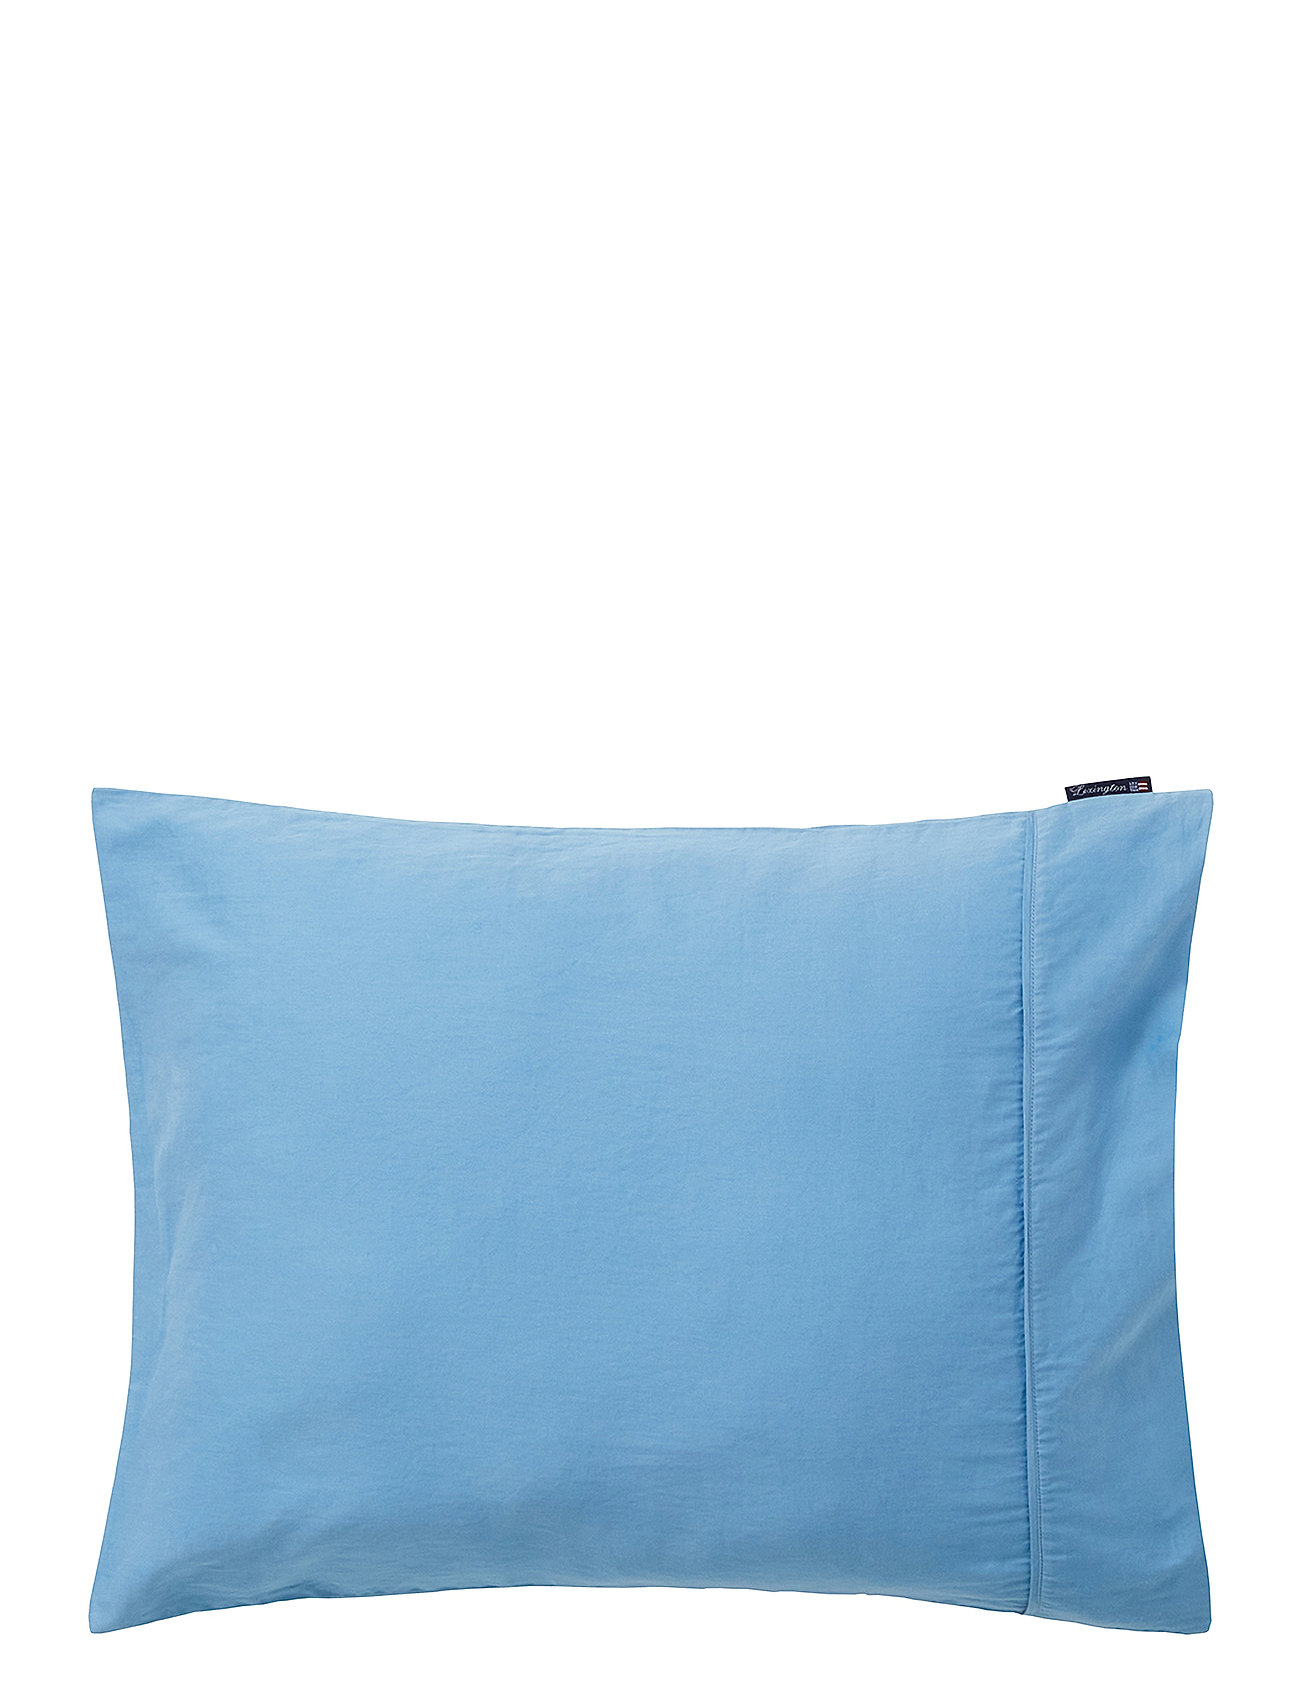 Blue Sky Washed Cotton Sateen Pillowcase Home Textiles Bedtextiles Pillow Cases Blue Lexington Home